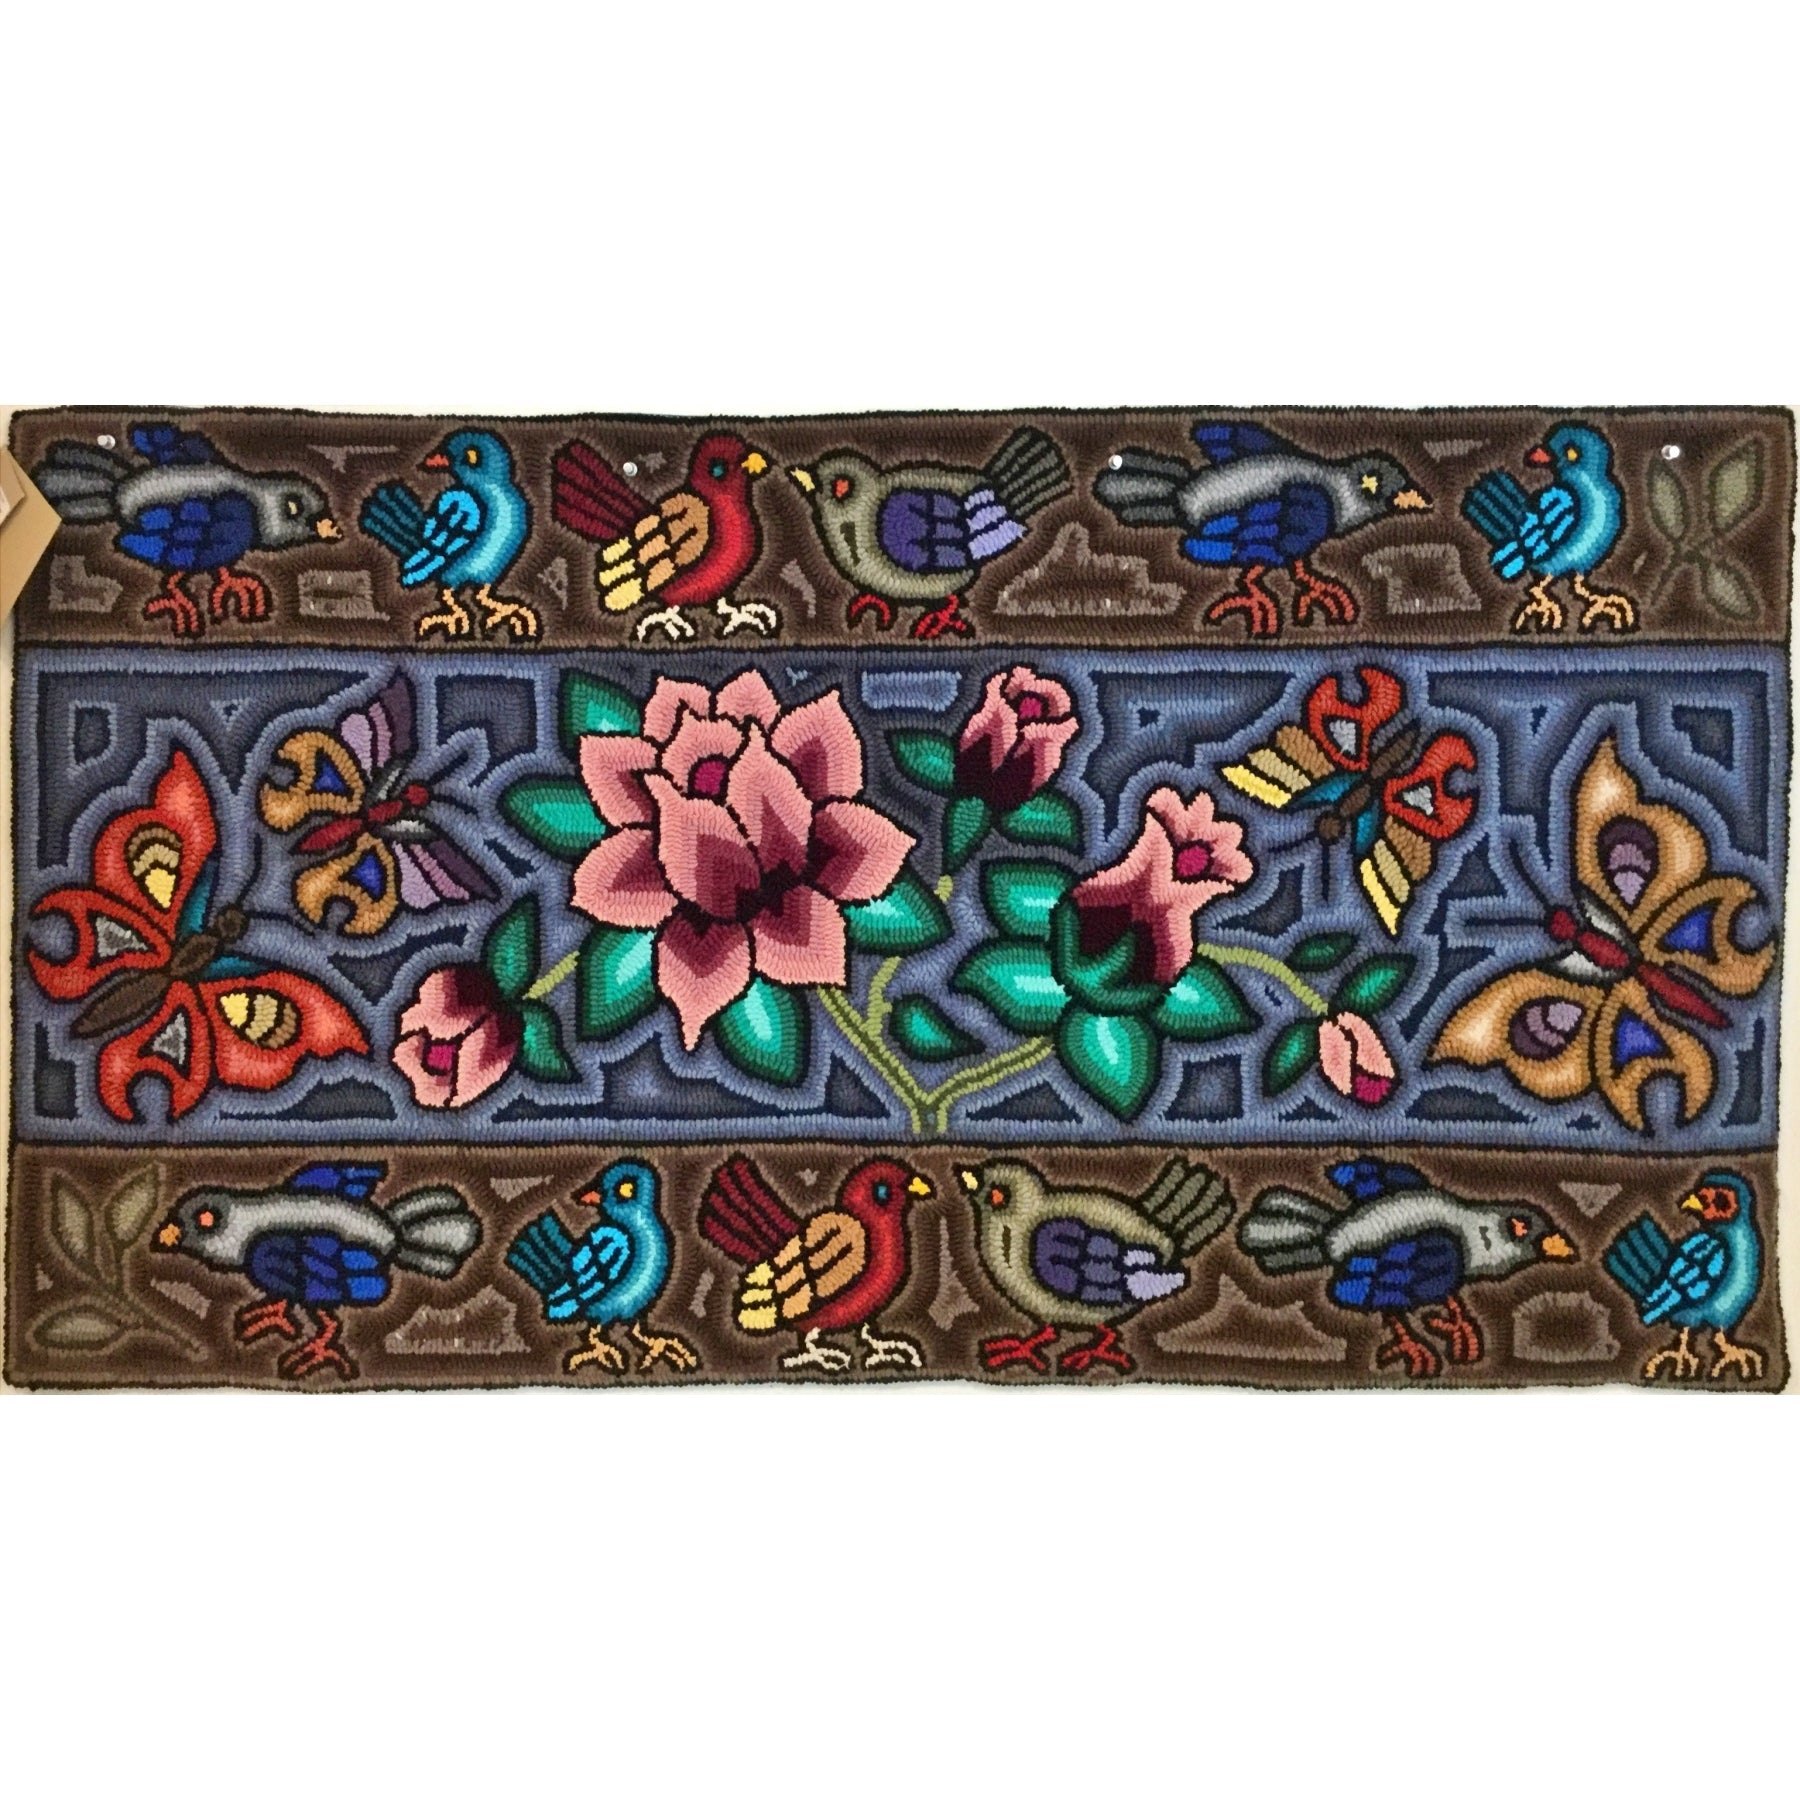 Multicolores Pattern #10, rug hooked by Micaela Churunel Aju